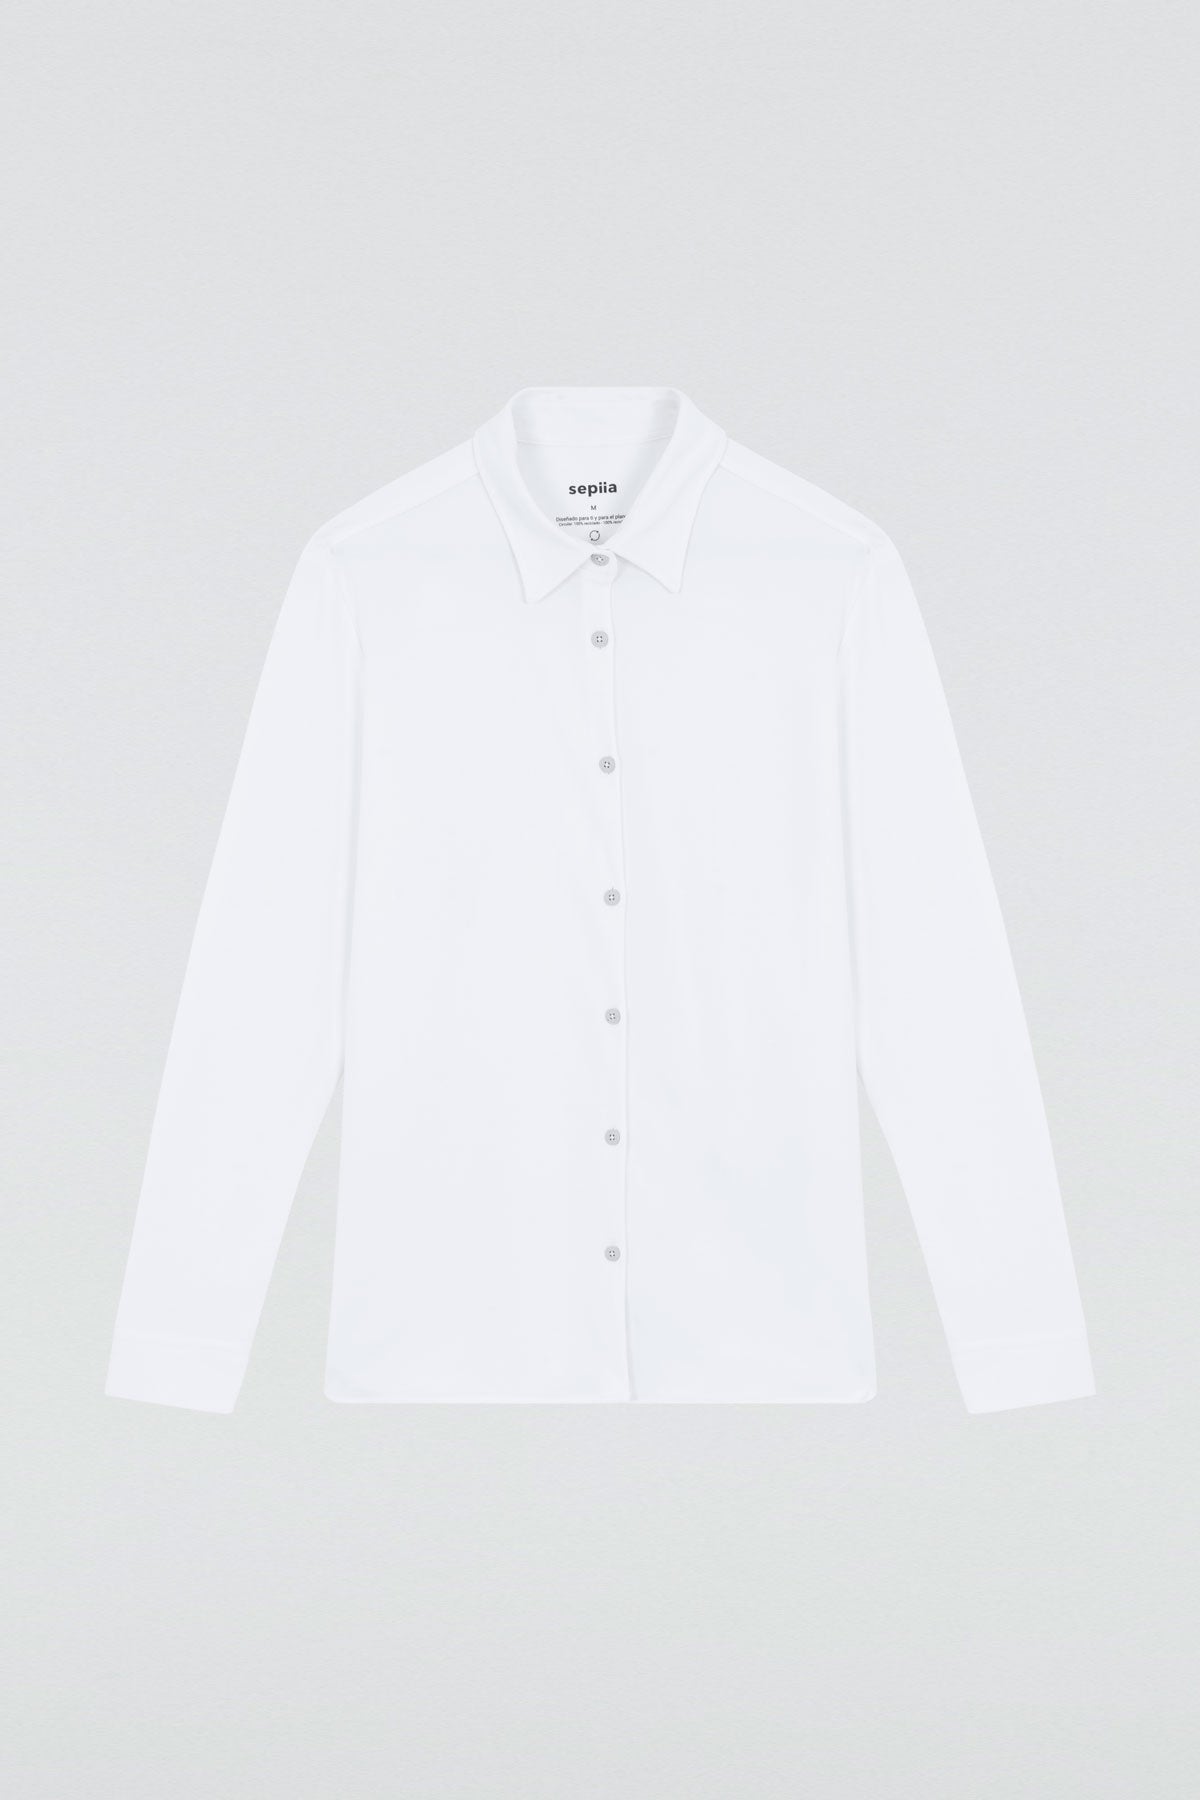 Camisa manga larga oversized mujer blanca: Camisa holgada de mujer blanca de manga larga para un estilo extra. Foto plano